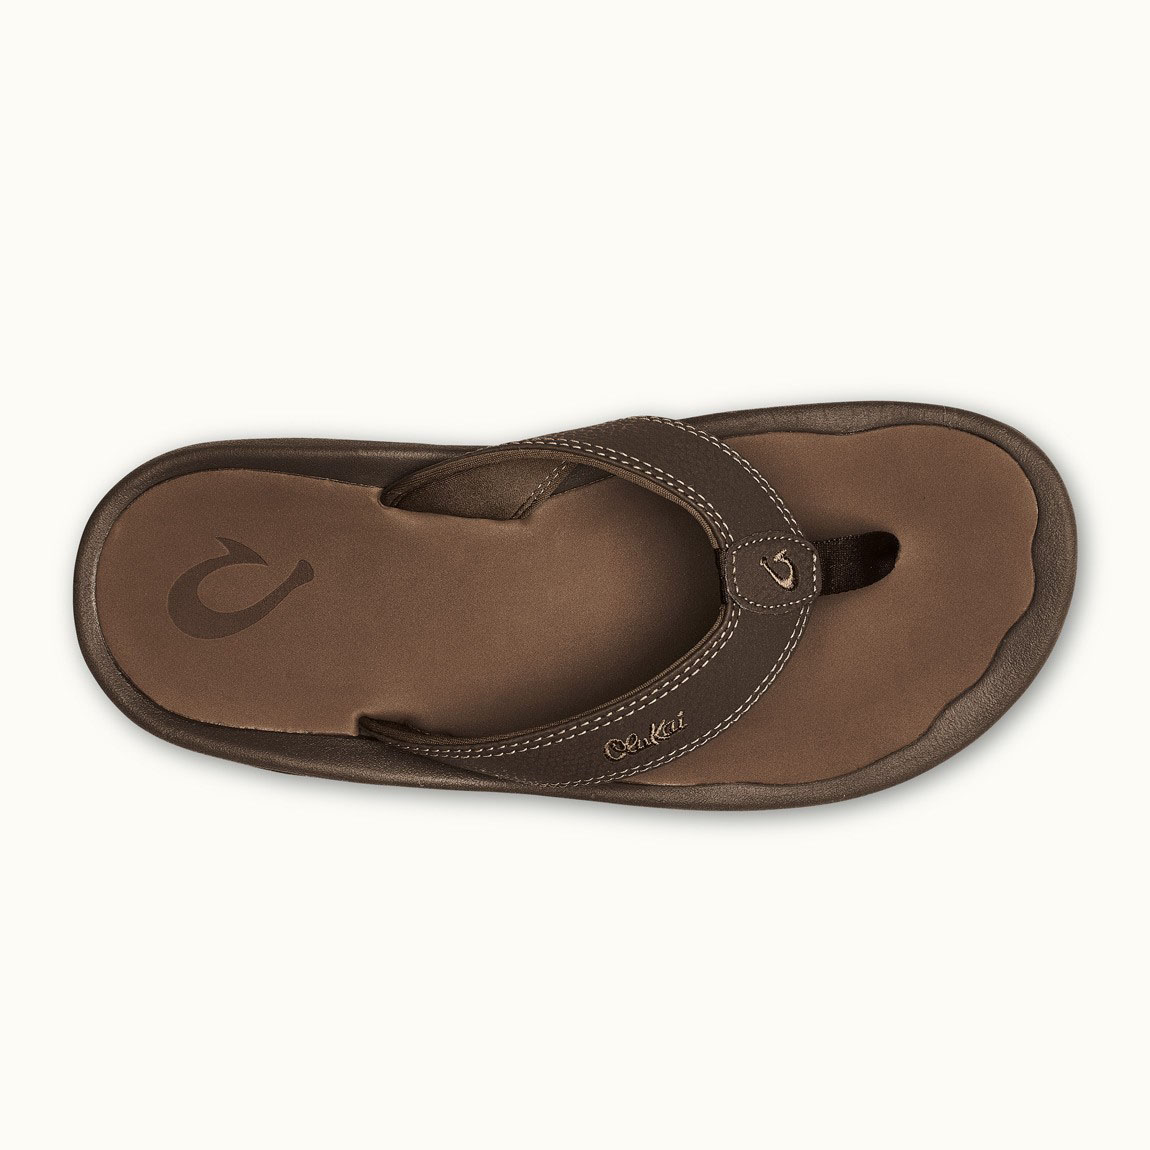 Olukai Men's Ohana Sandal Dark Brown Leather | Birkenstock  More